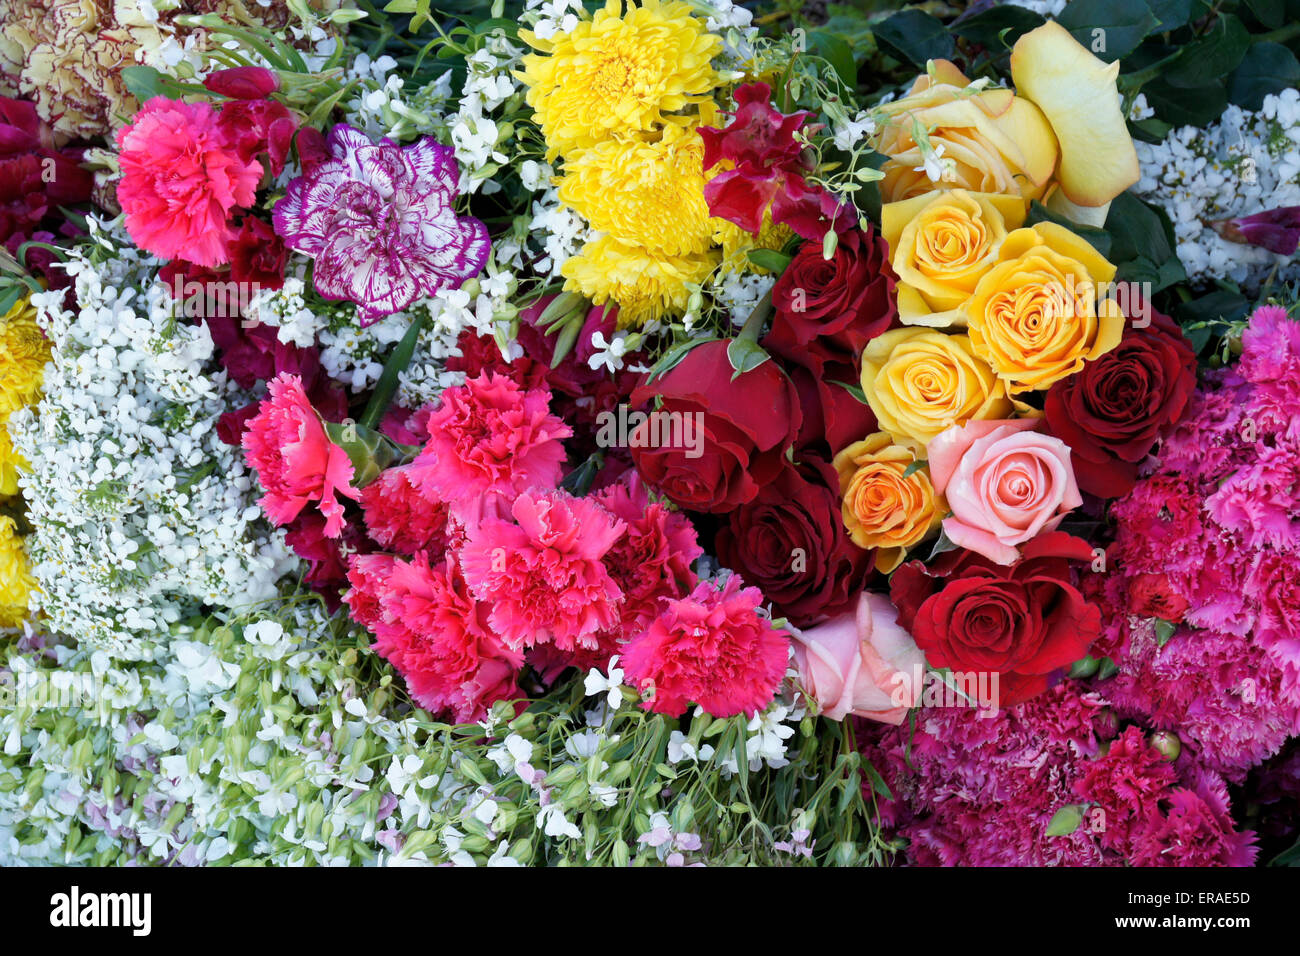 Flowers for sale in Sunday market, Urcos (near Cuzco), Peru Stock Photo